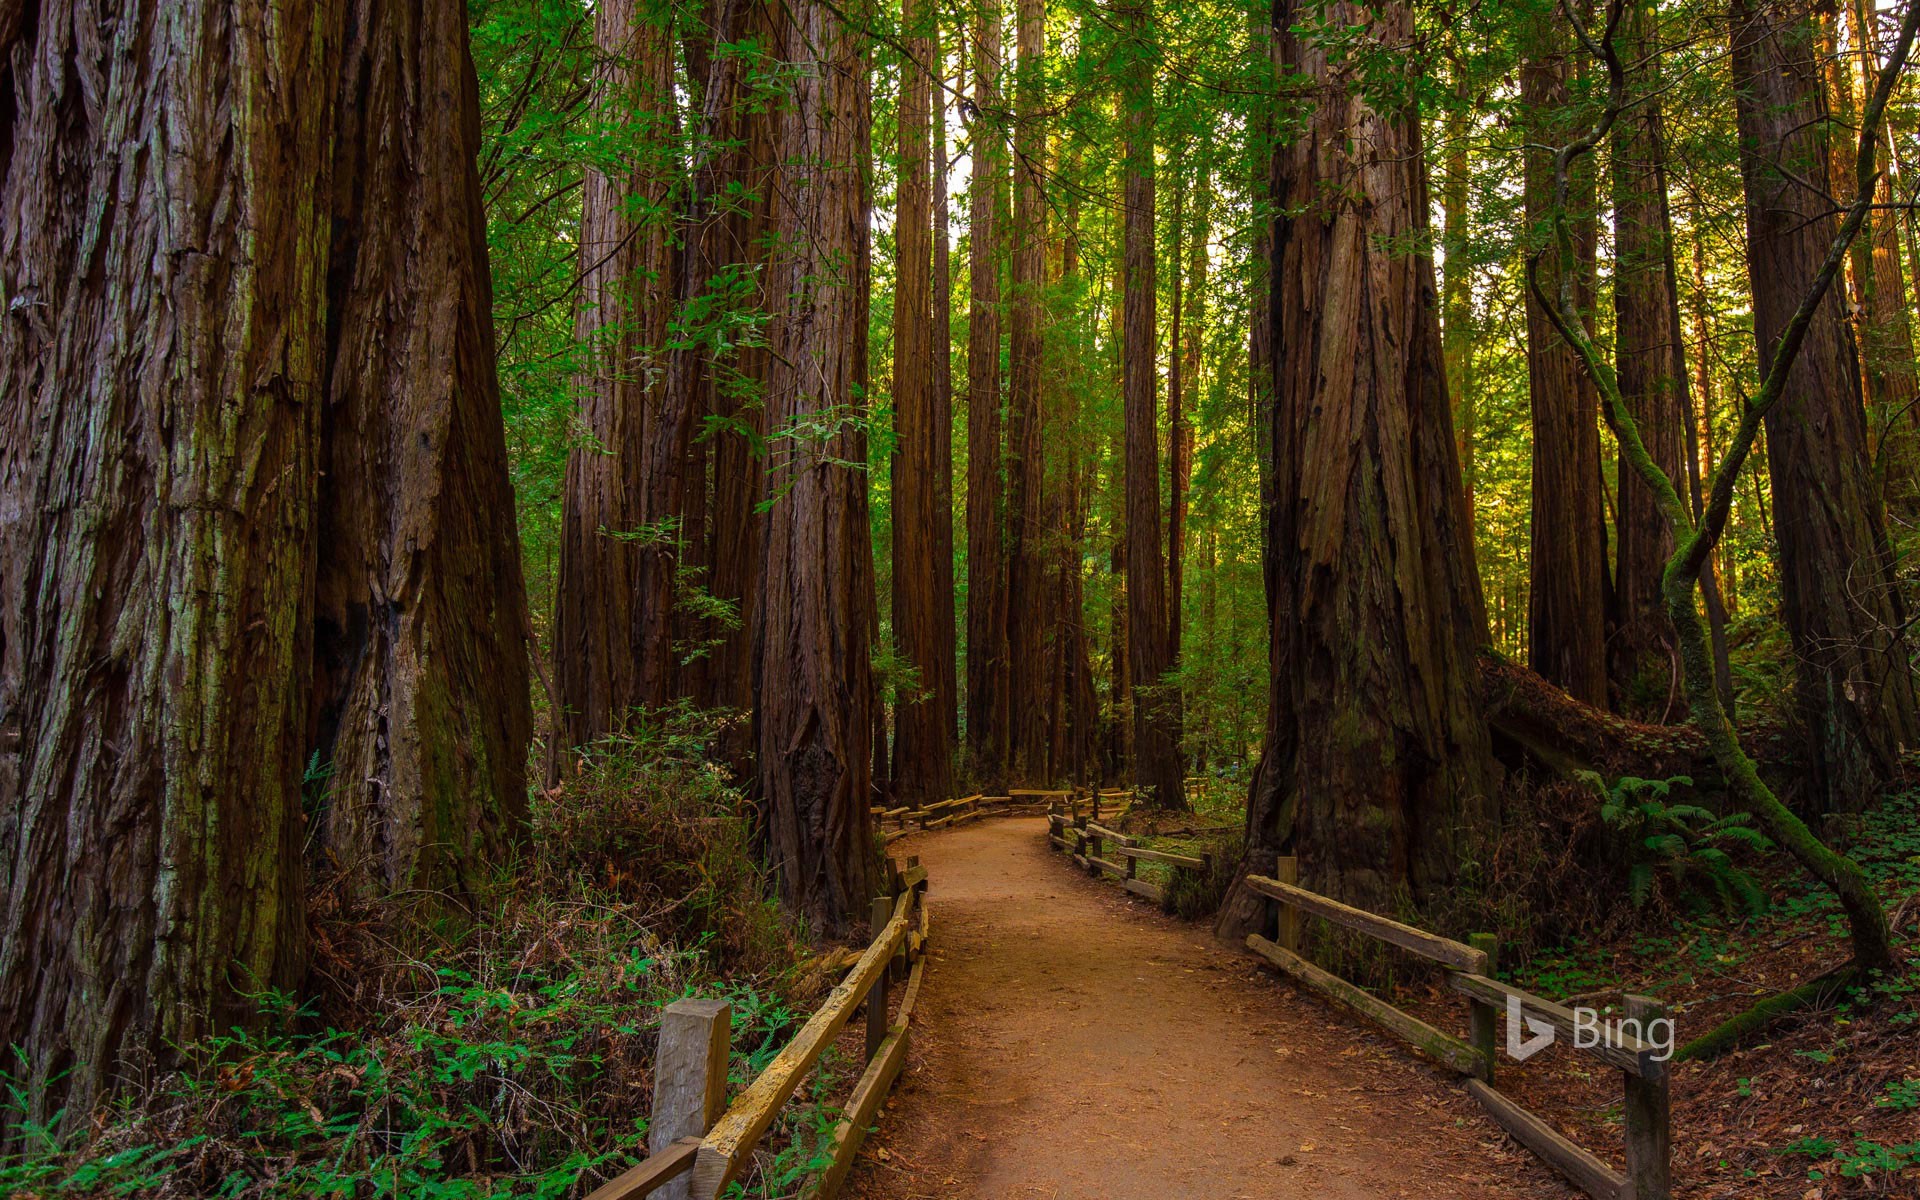 Muir Woods National Monument near San Francisco, California